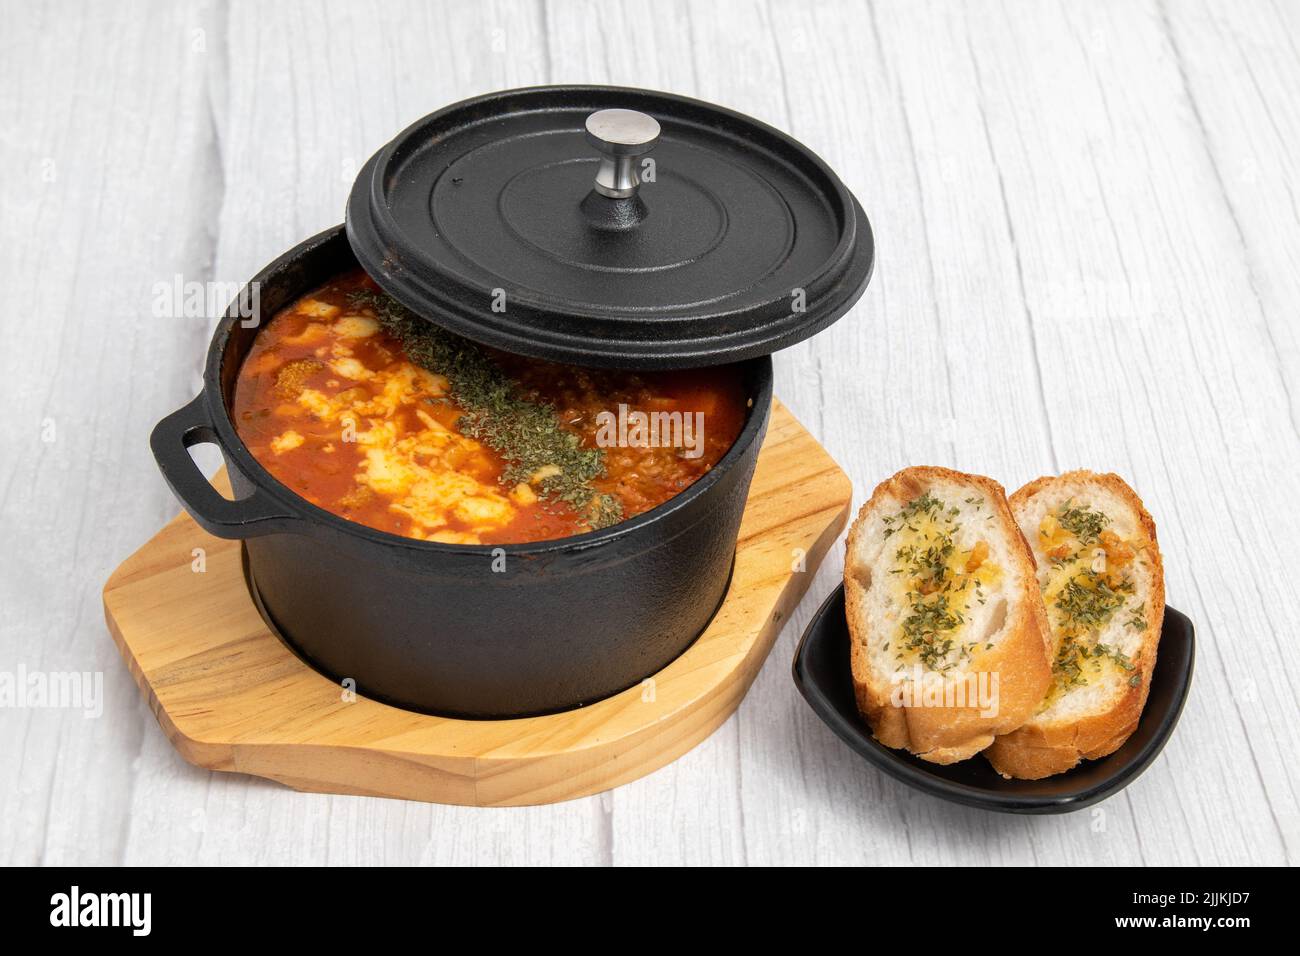 https://c8.alamy.com/comp/2JJKJD7/an-angle-shot-of-a-soup-served-in-a-small-pot-next-to-bruschetta-bread-slicers-2JJKJD7.jpg